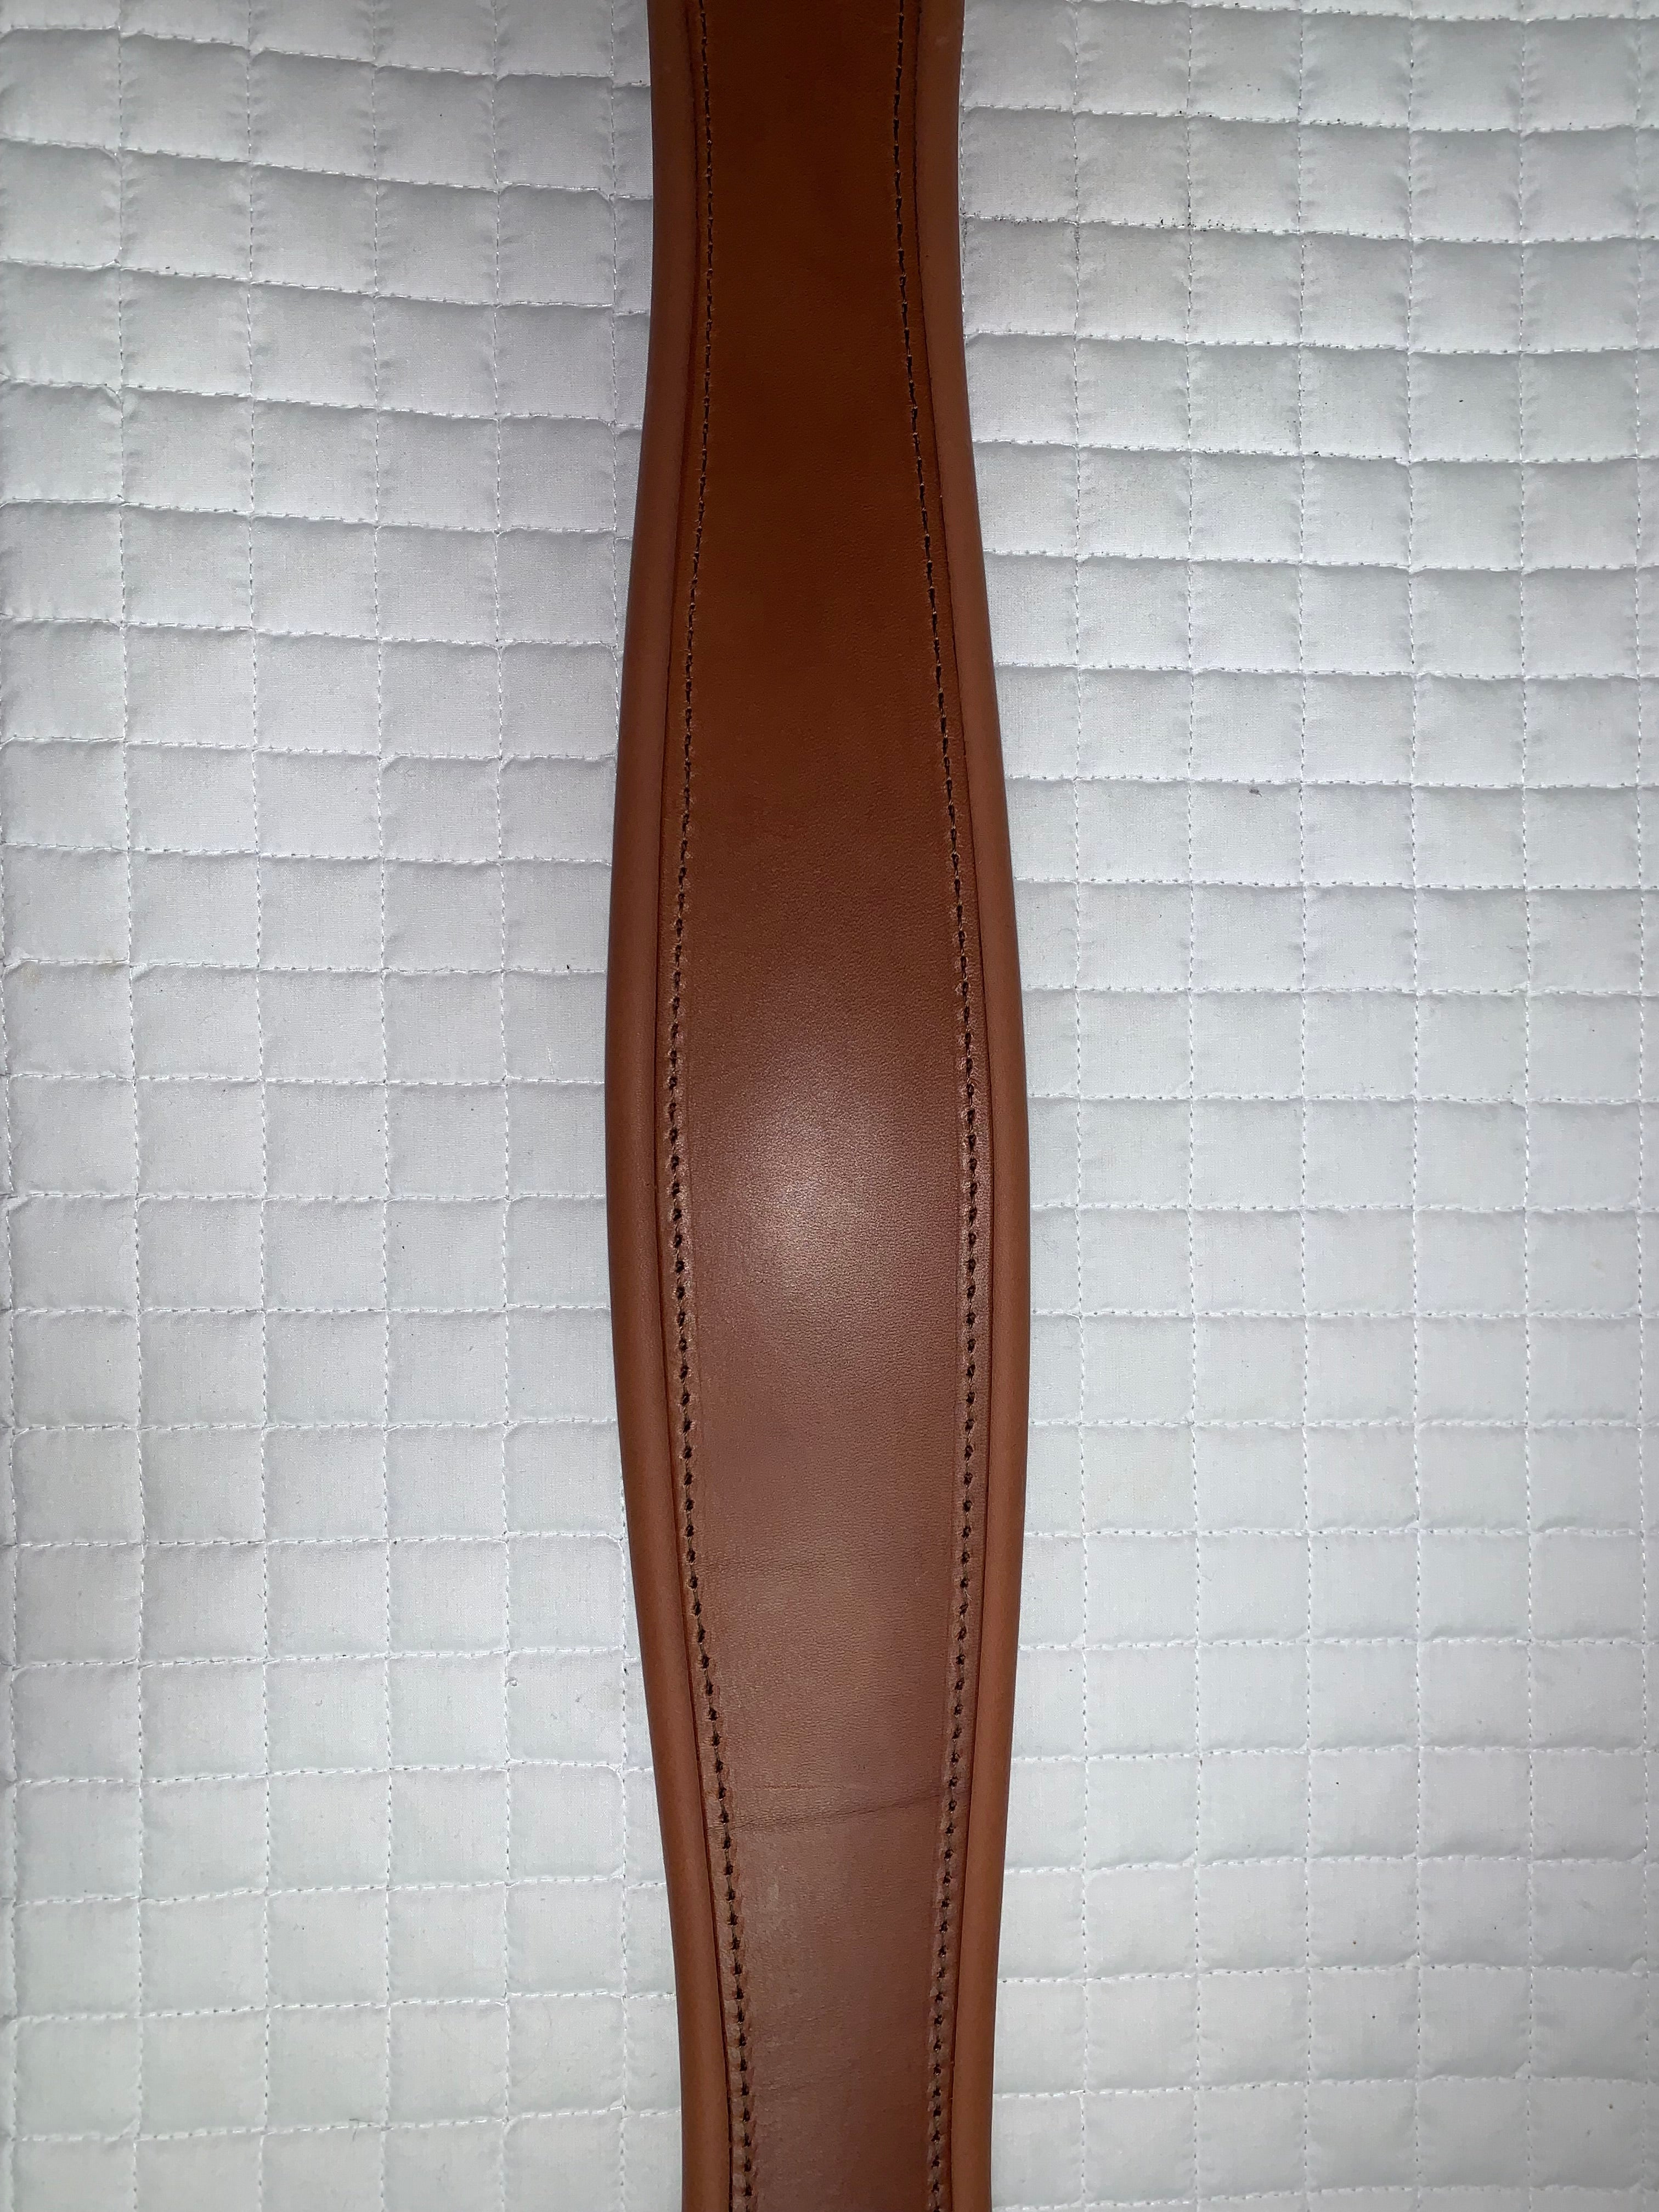 New England 46" Leather Overlay Girth